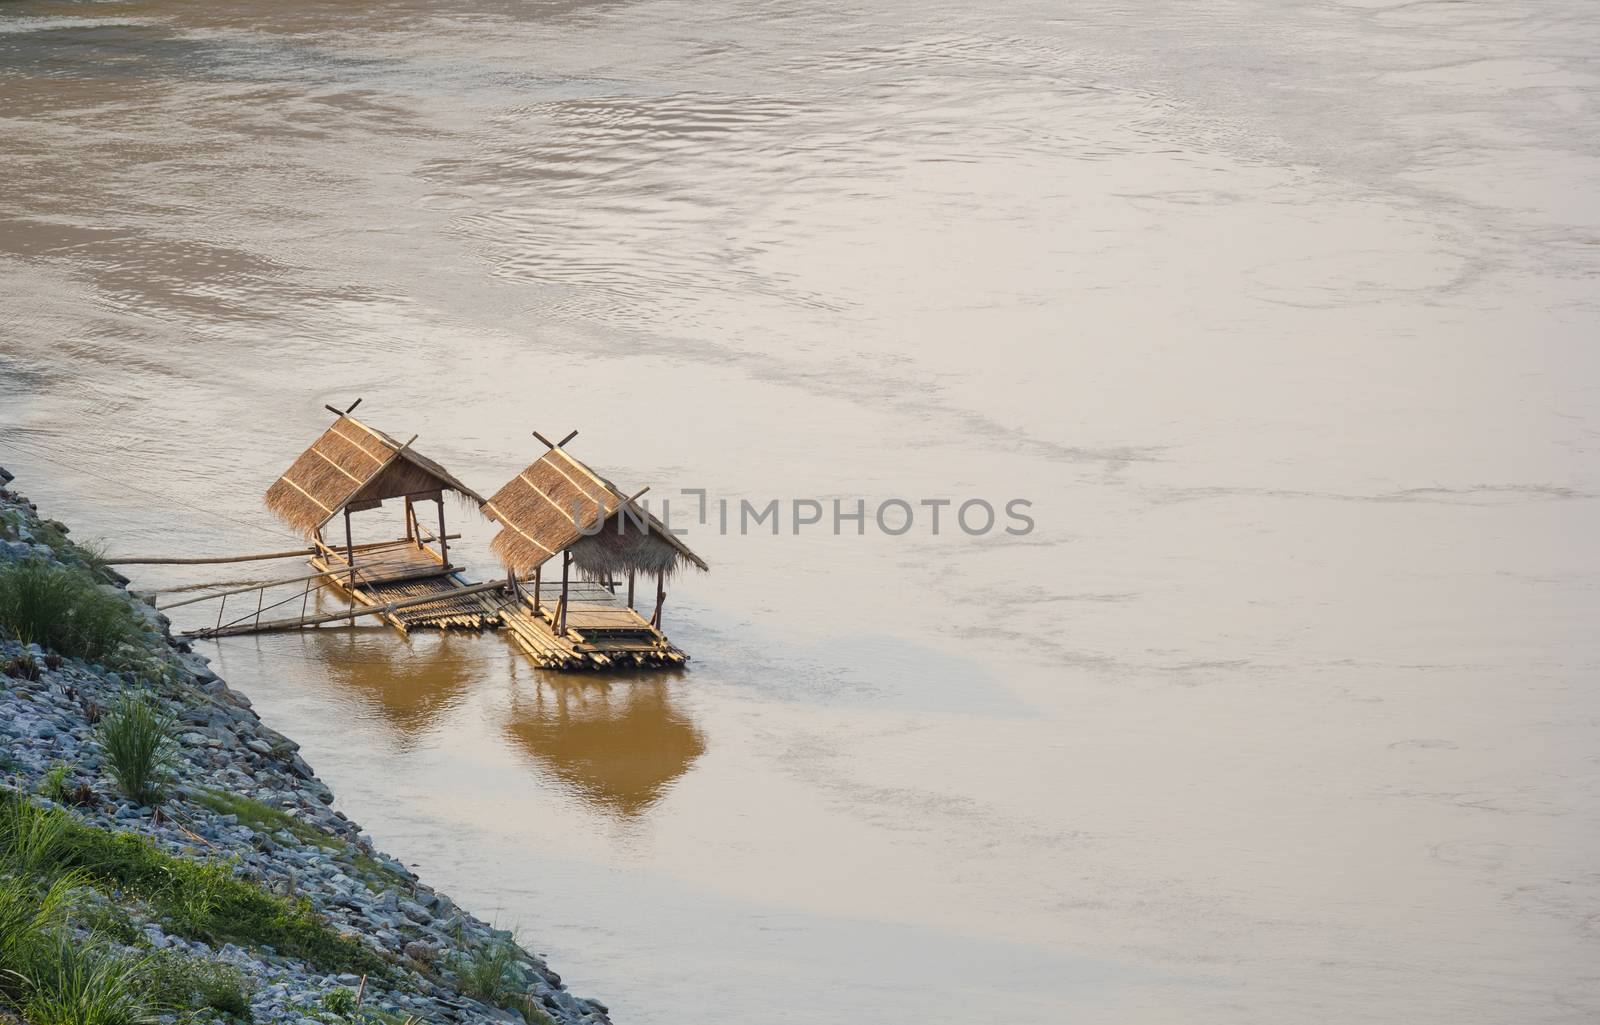 Bamboo Raft in mekong River